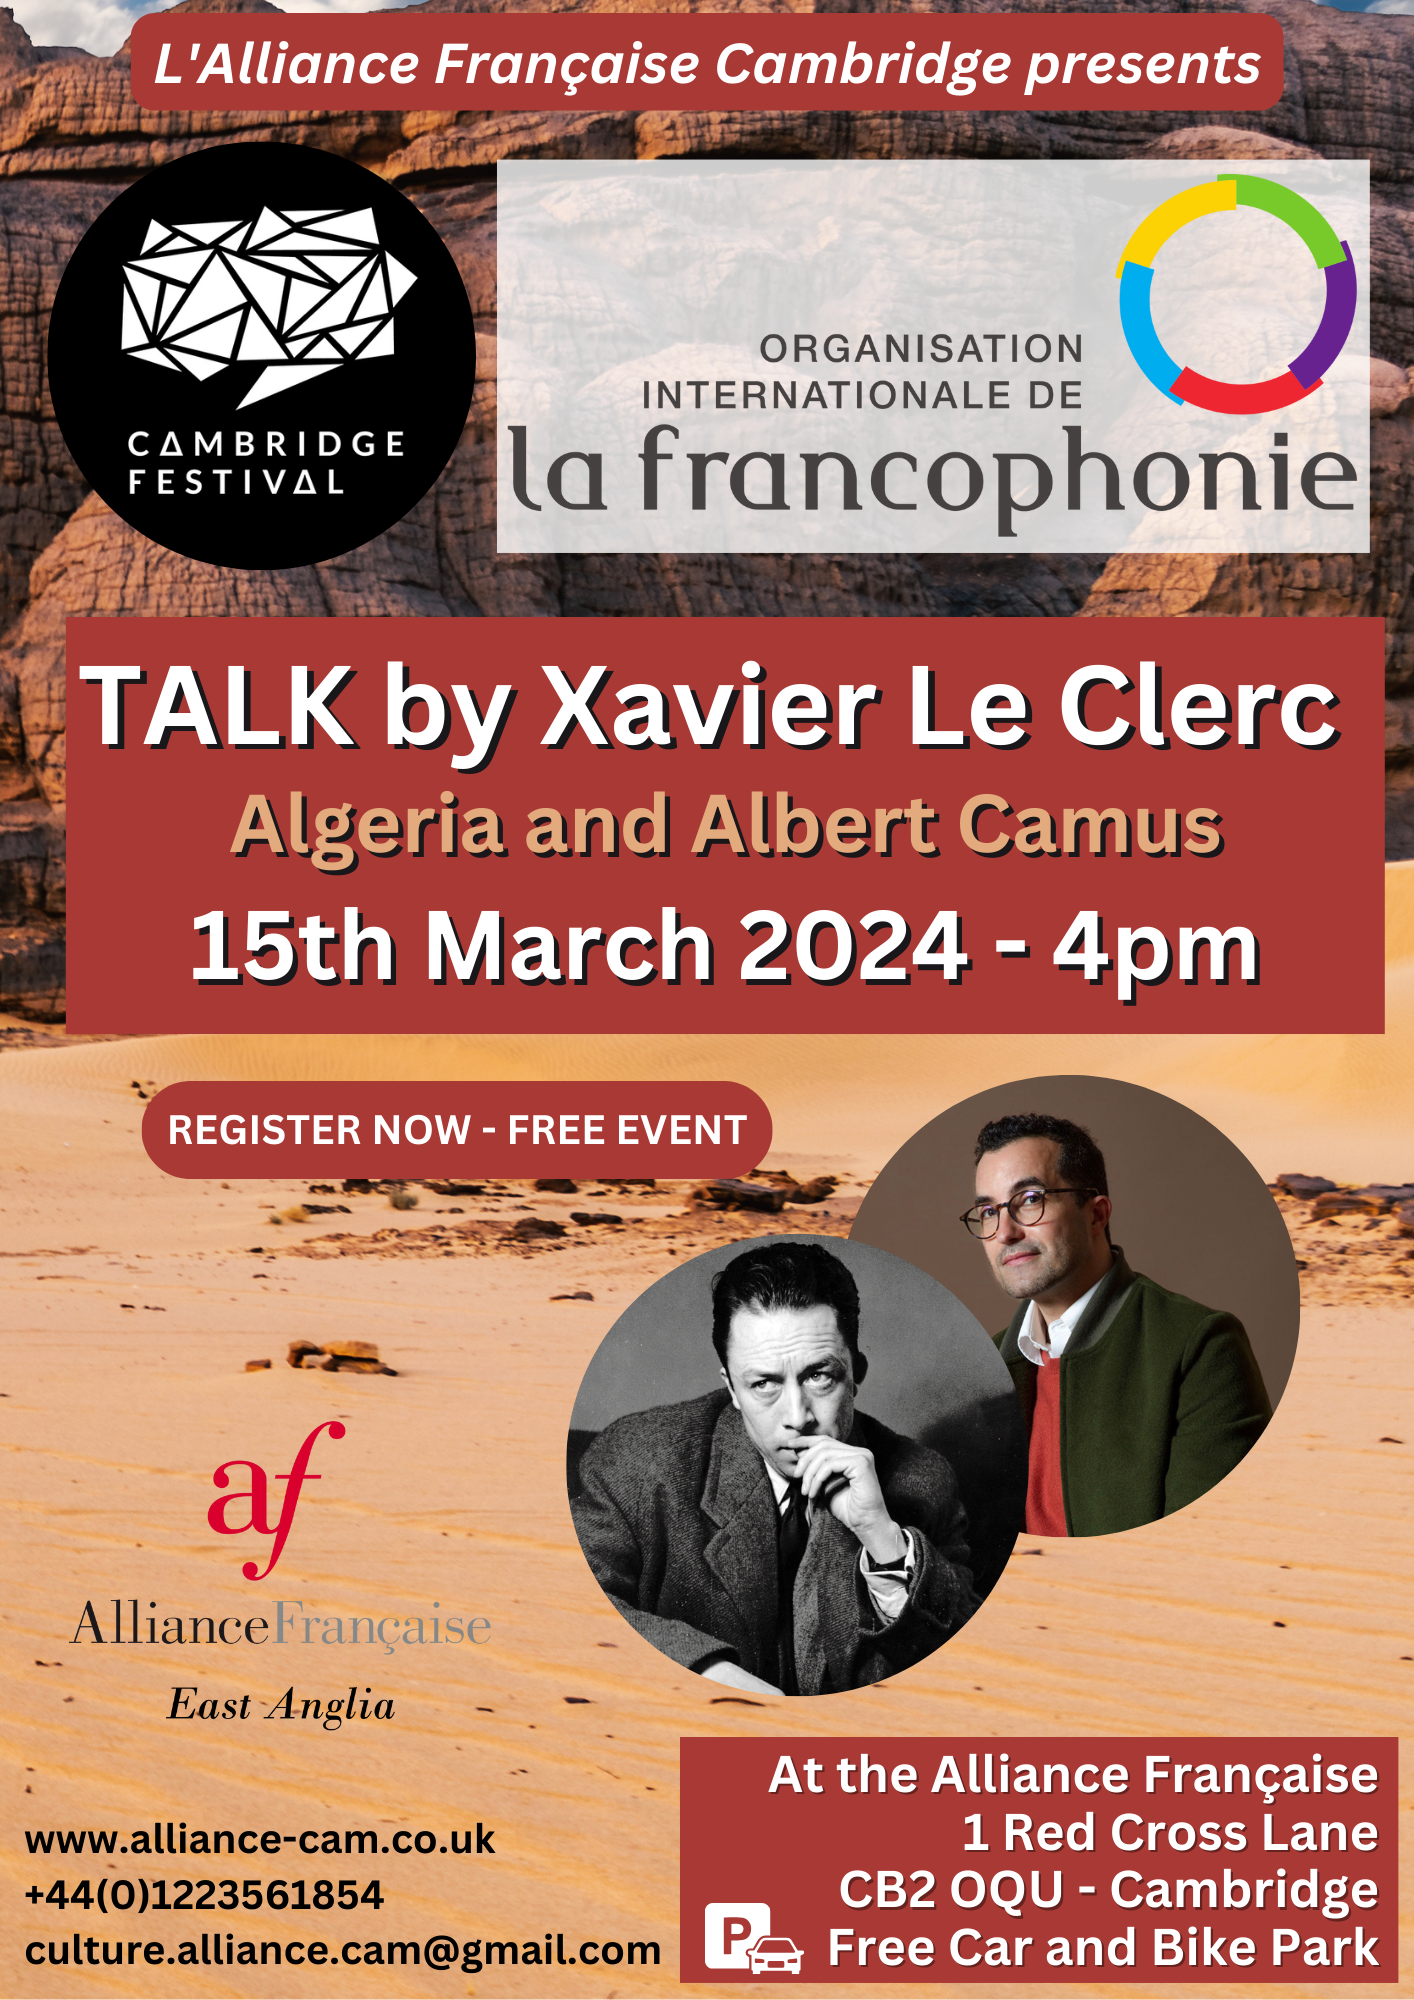 Talk by Xavier Le Clerc - Algeria and Albert Camus